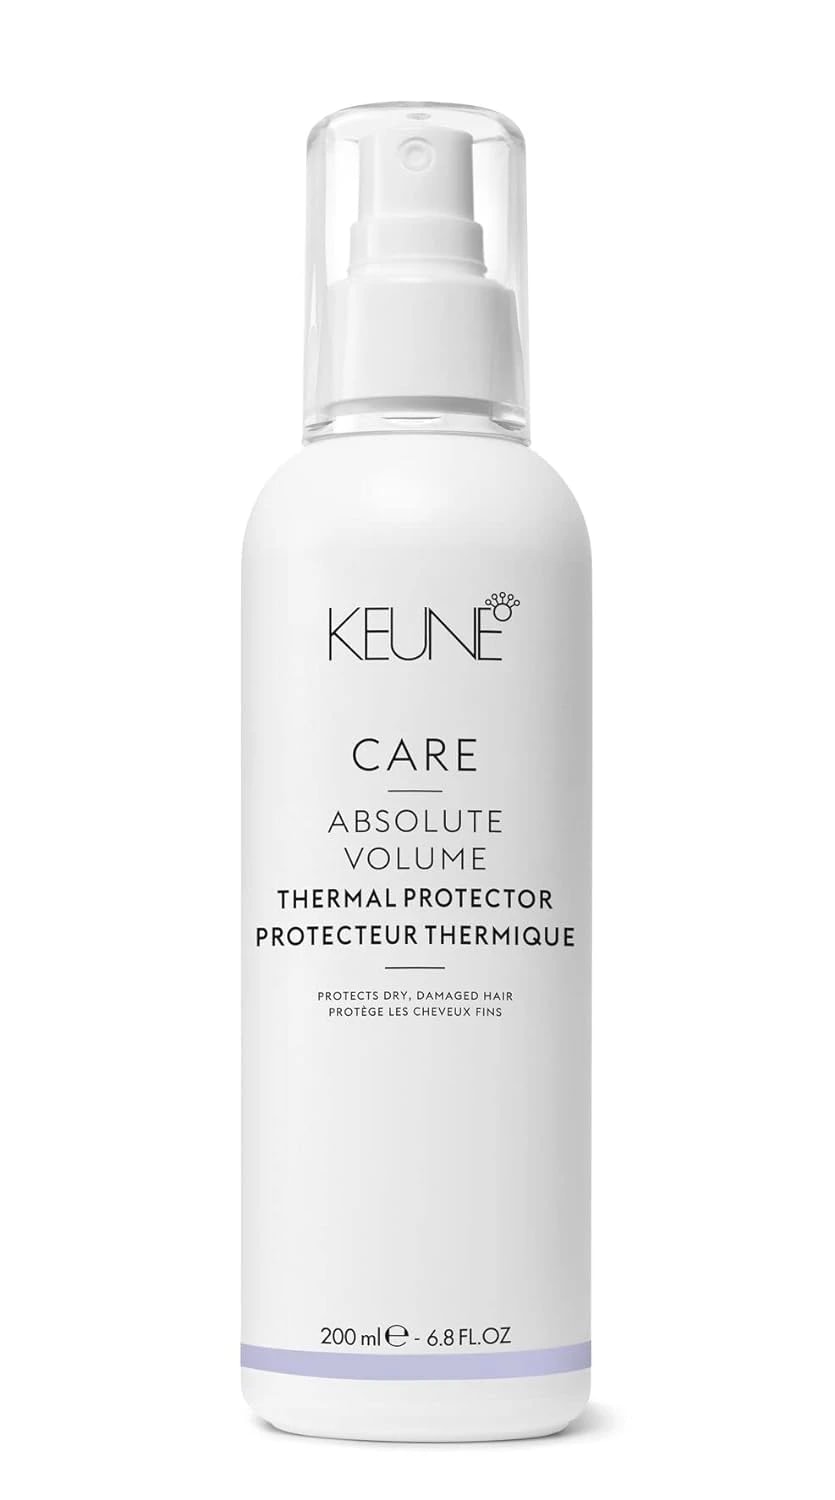 Keune Care Absolute Volume thermal protector, 200ml